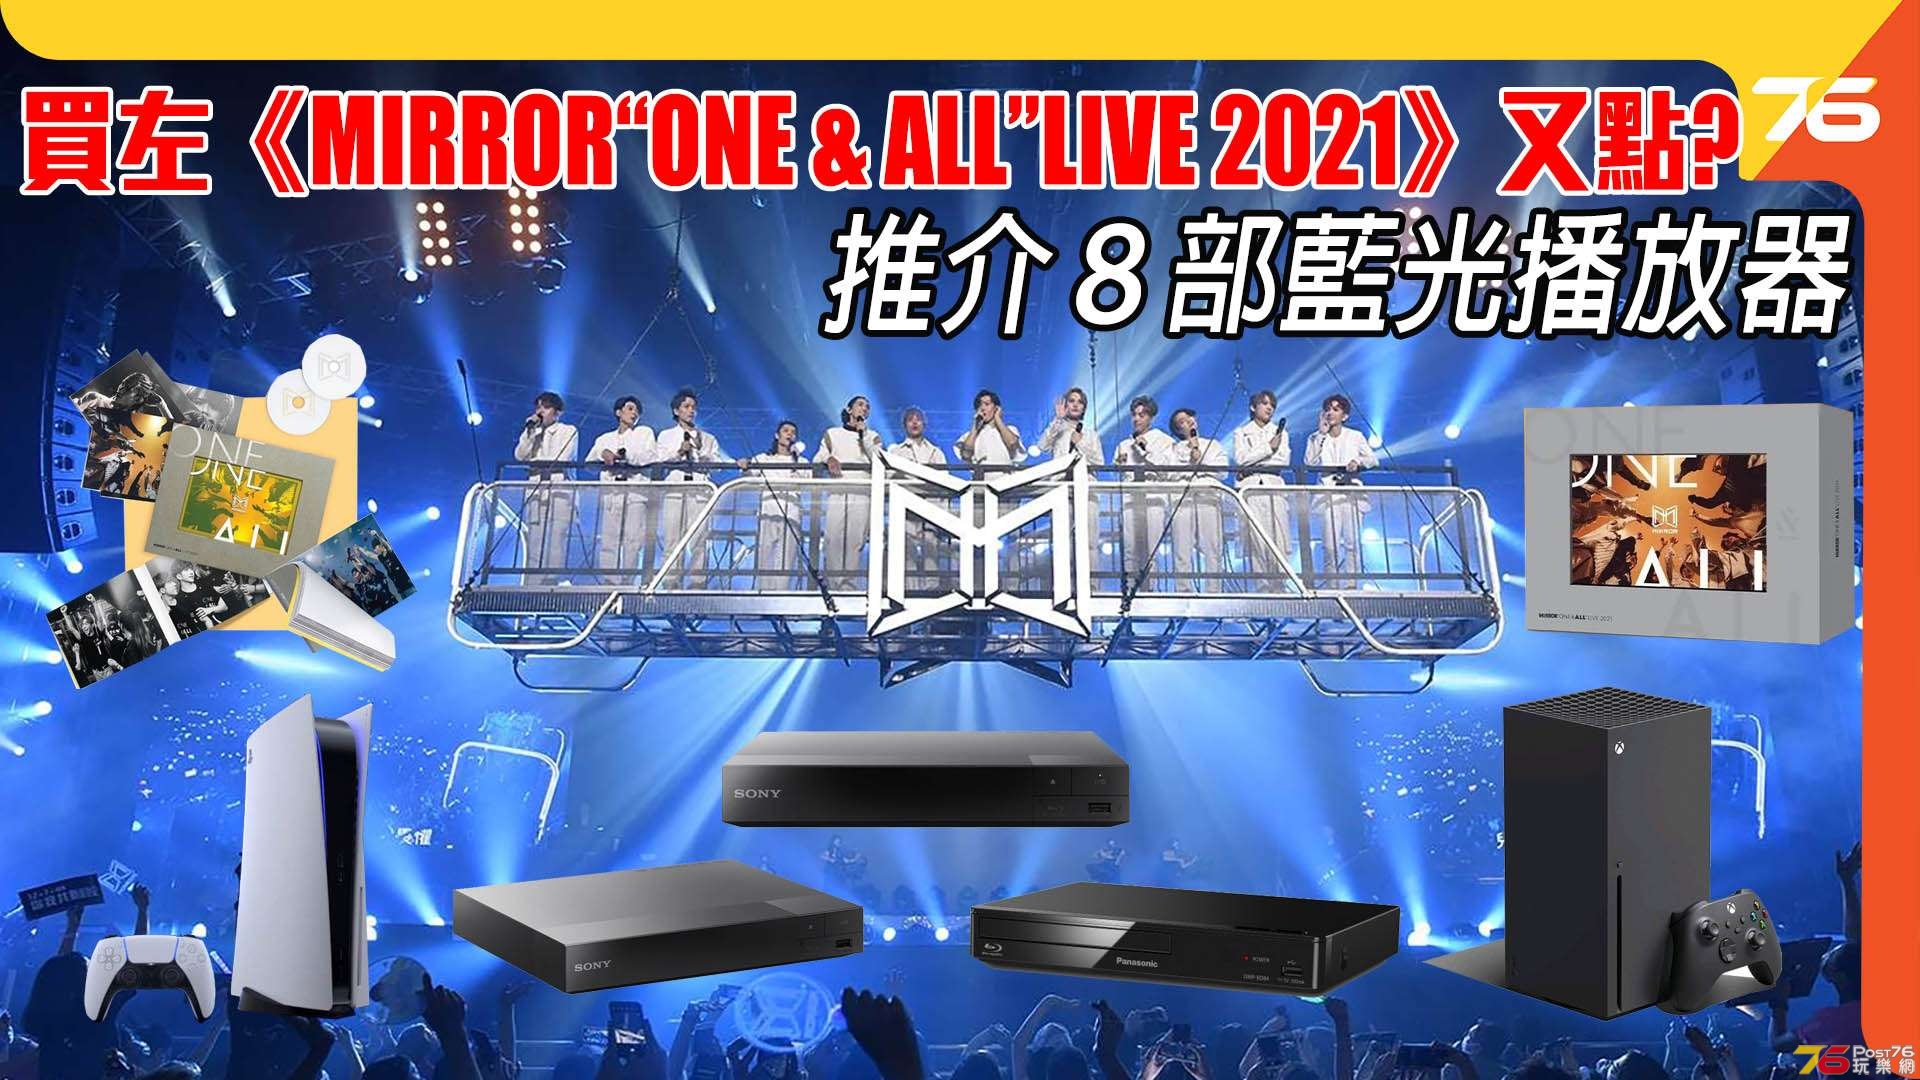 mirror-one-all-live-2021-blu-ray player.jpg